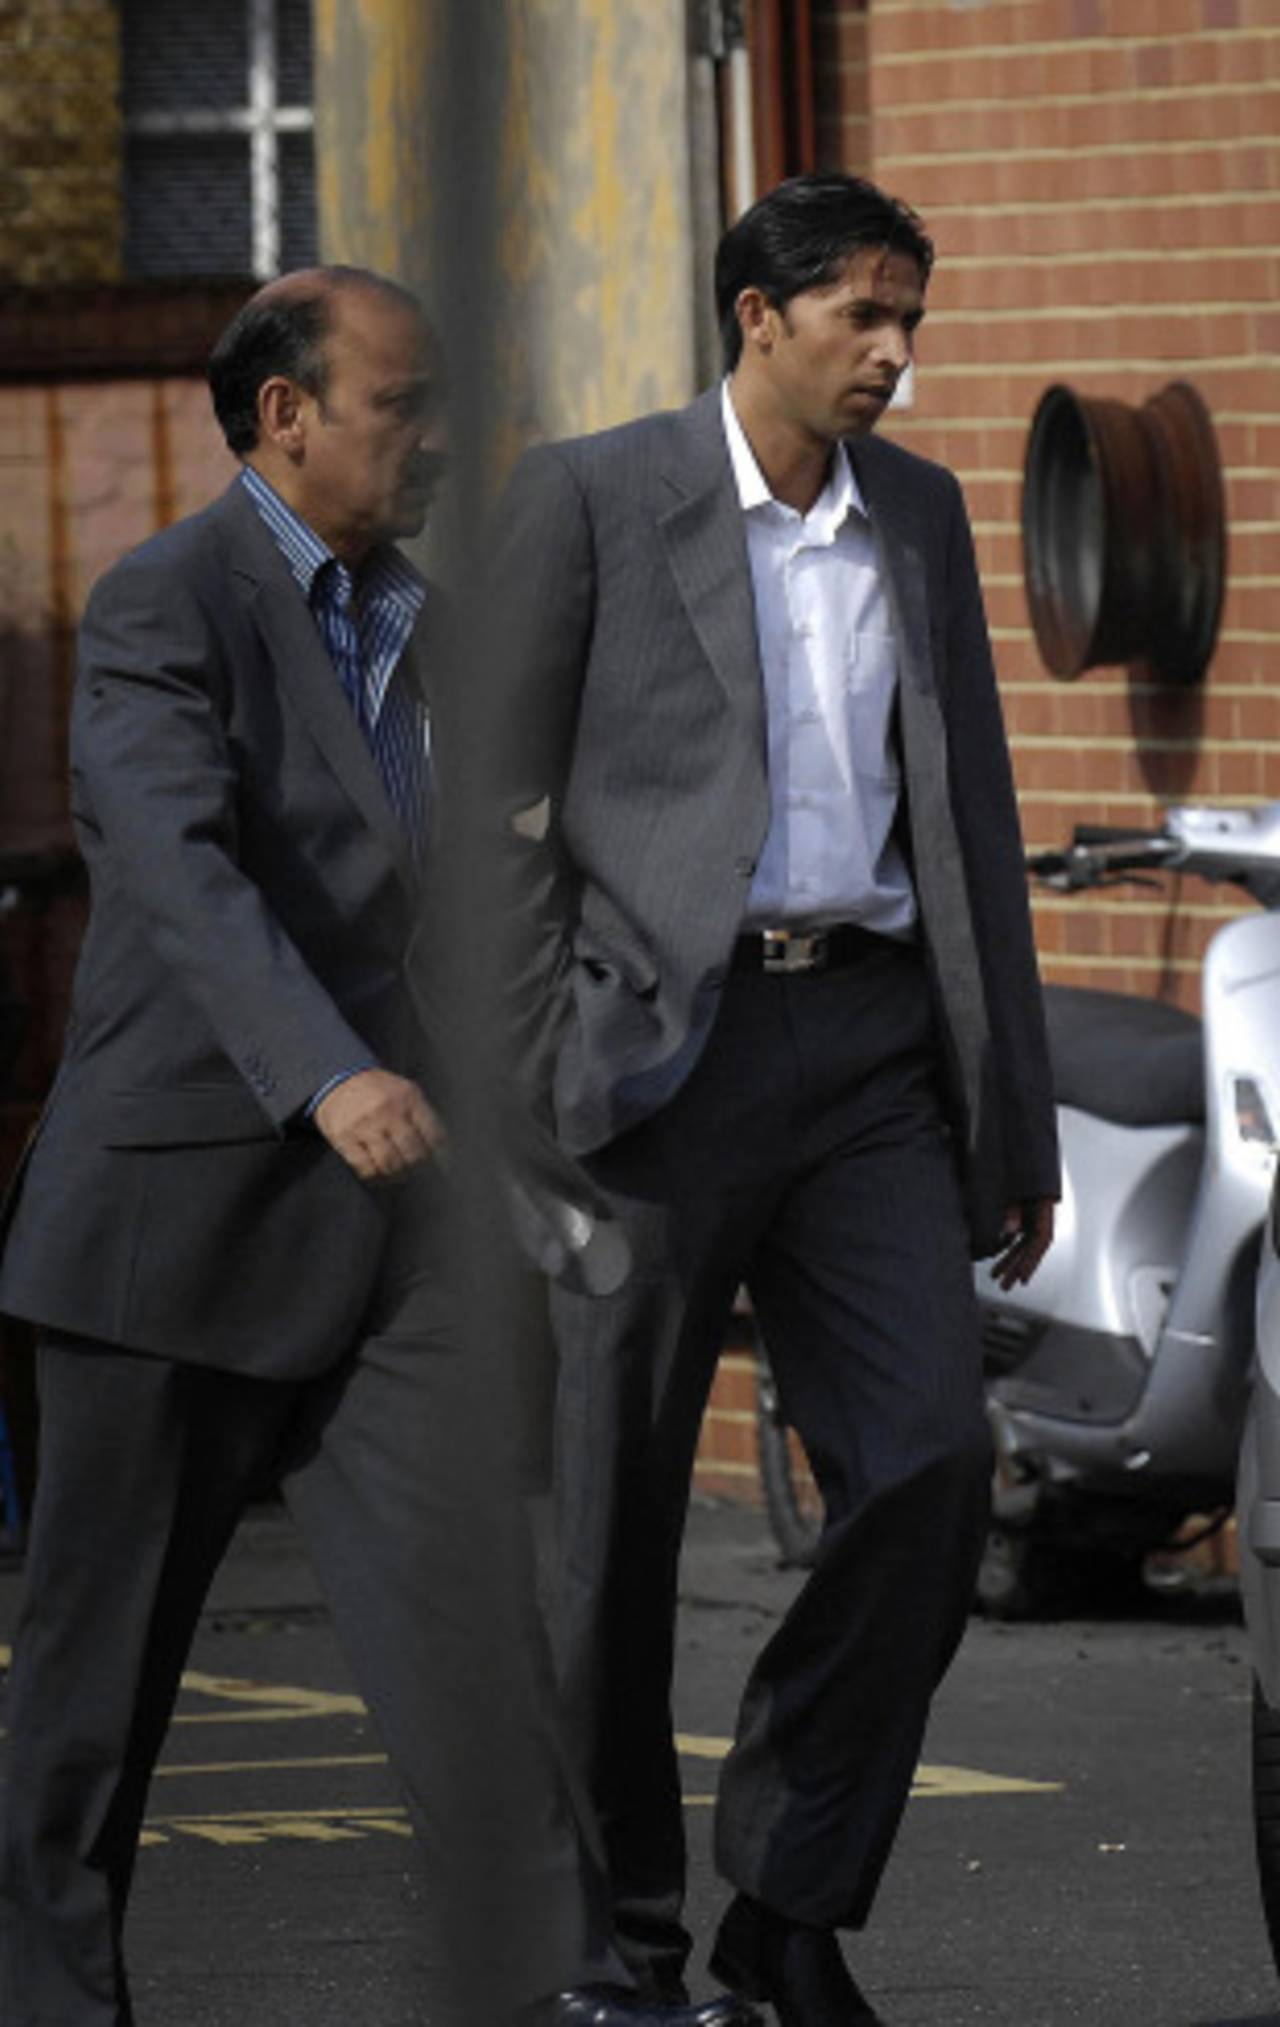 Mohammad Asif arrives at Kilburn police station in London for questioning, September 3, 2010